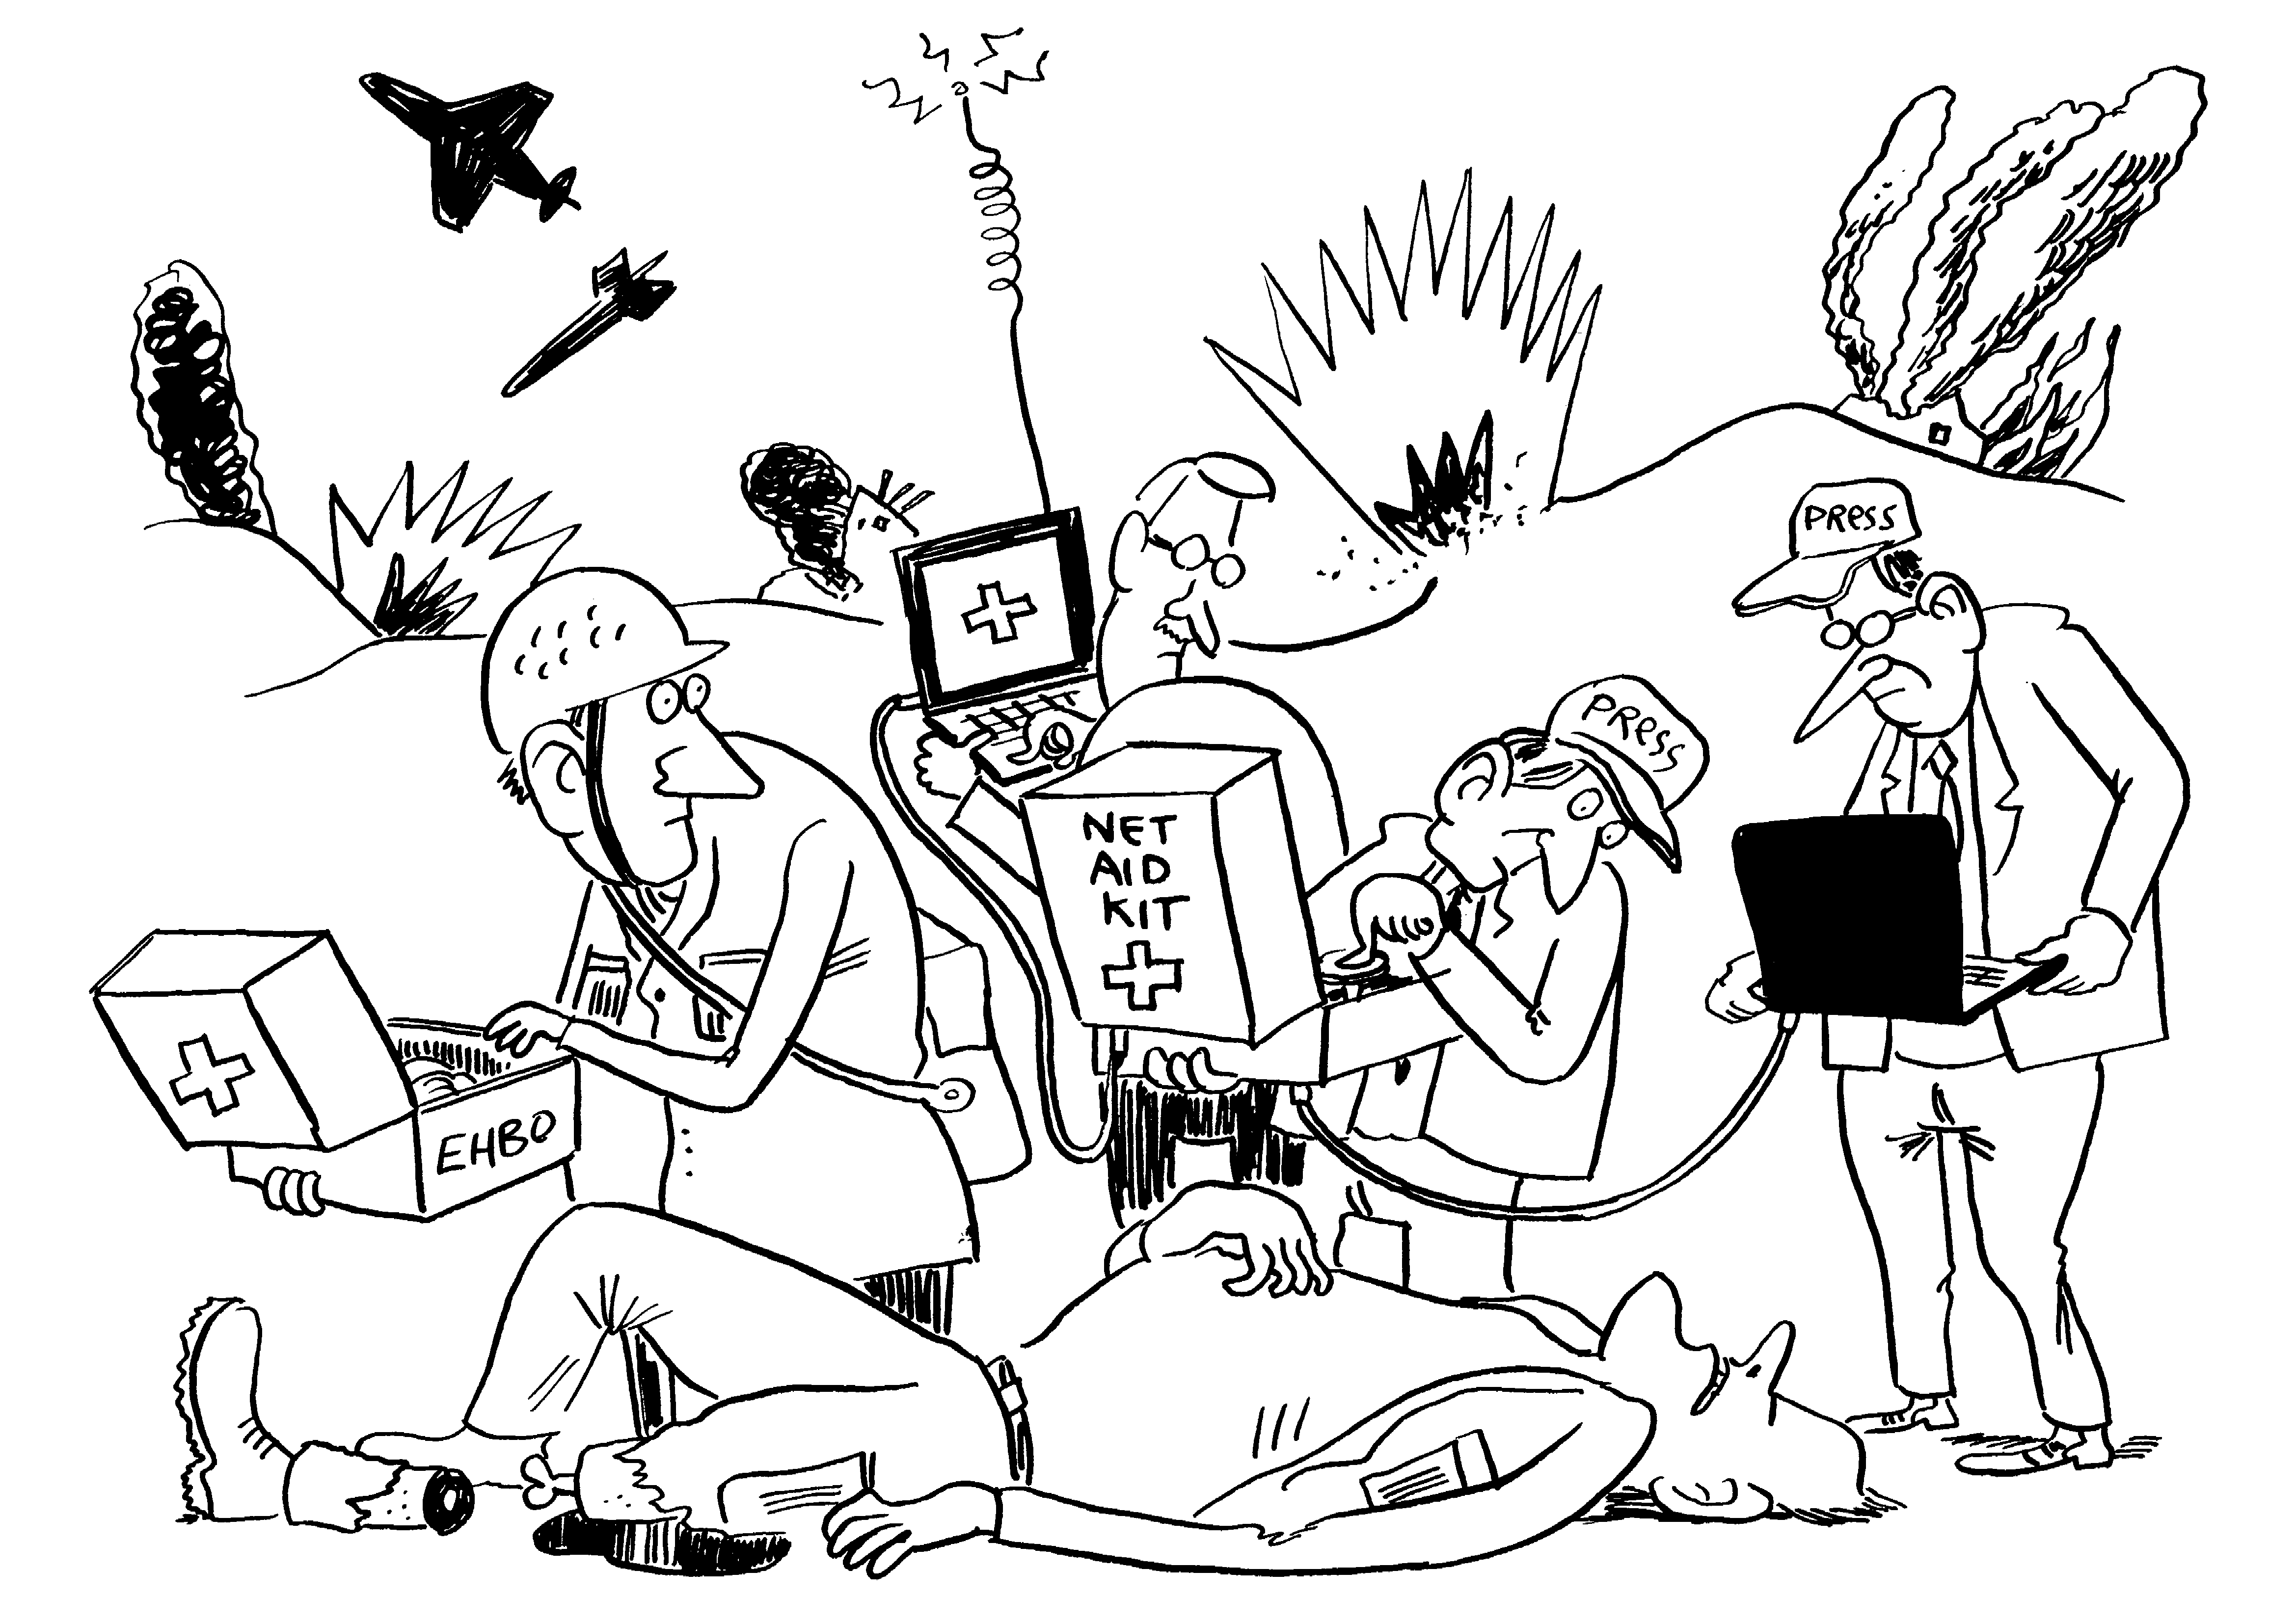 Cartoon of the NetAidKit from the ISOC.nl Innovation Award created by Michiel van de Pol/ComicHouse.nl